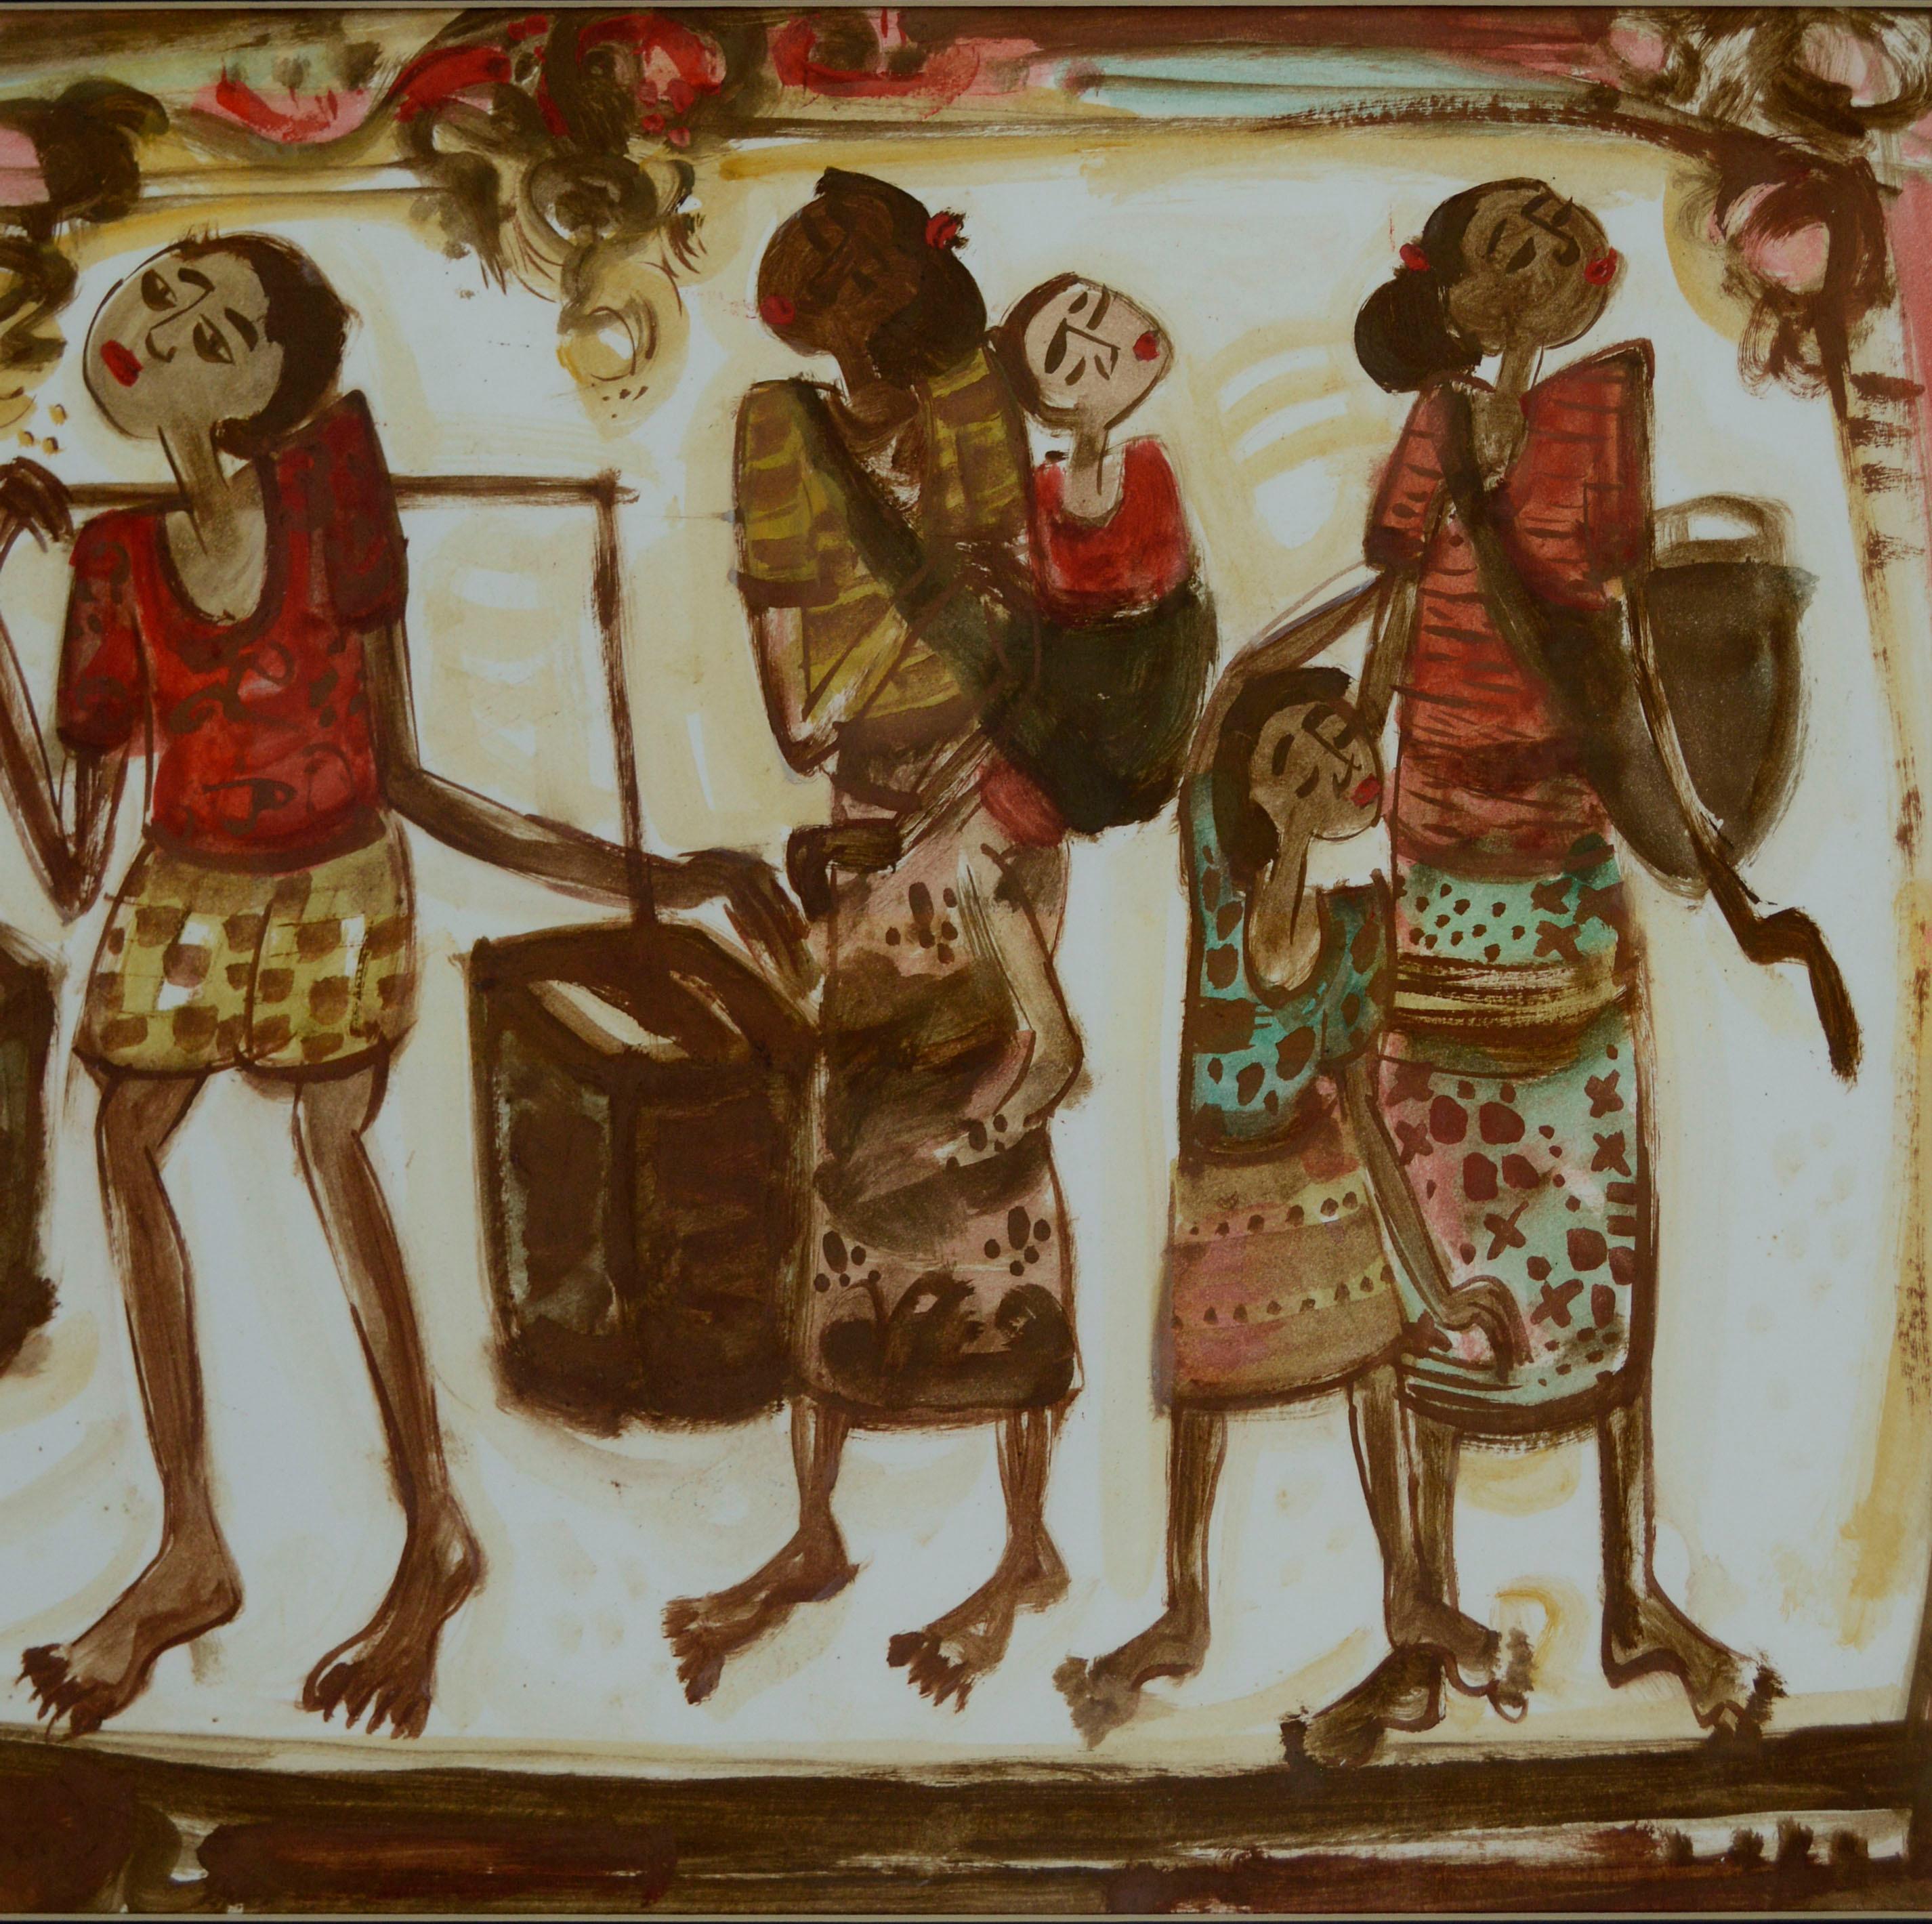 Women Carrying Baskets with Children, Figurative Gouache on Paper  - Folk Art Art by Unknown